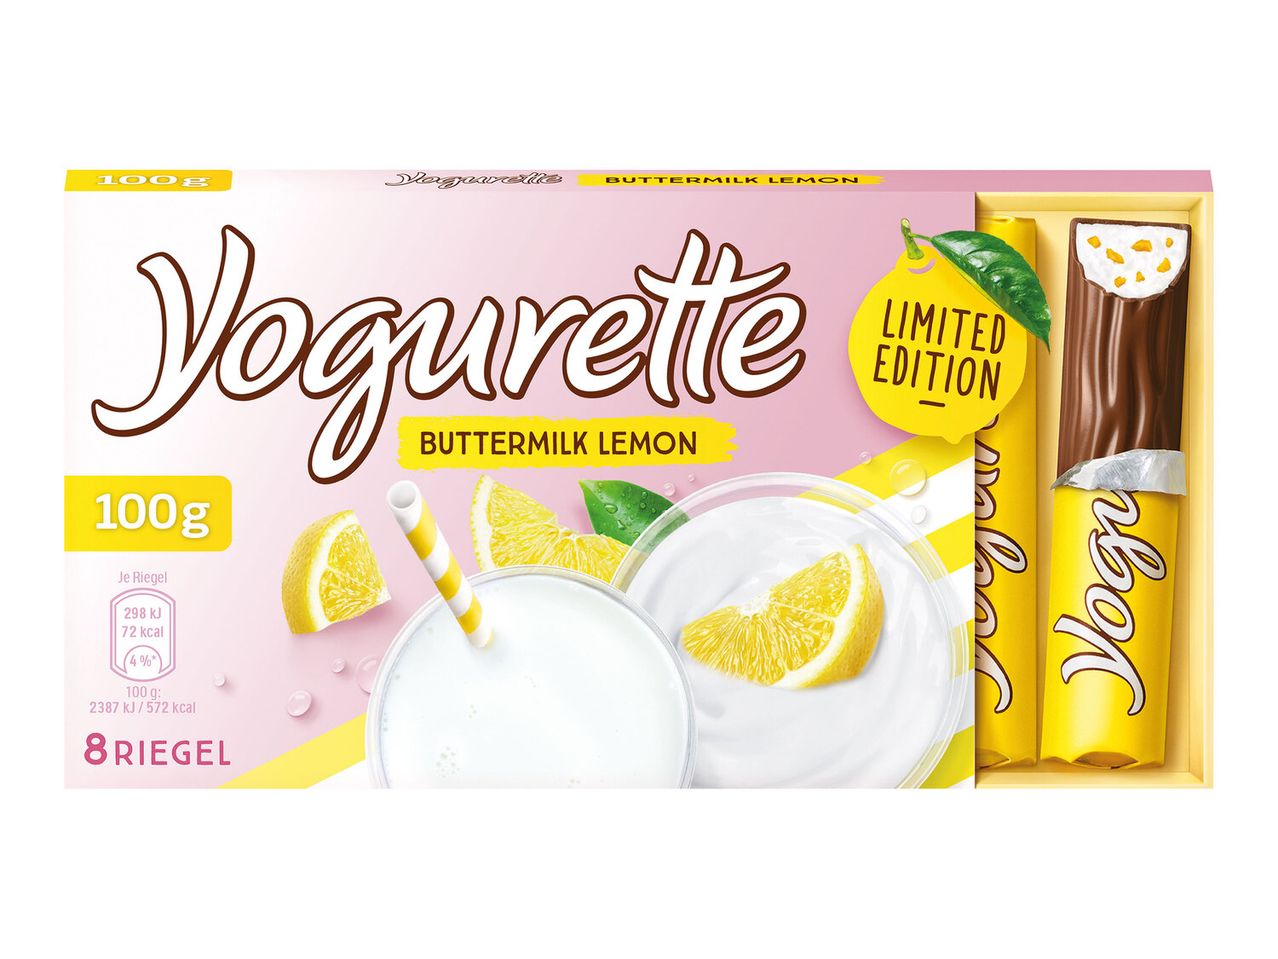 Yogurette Lemon Buttermilk